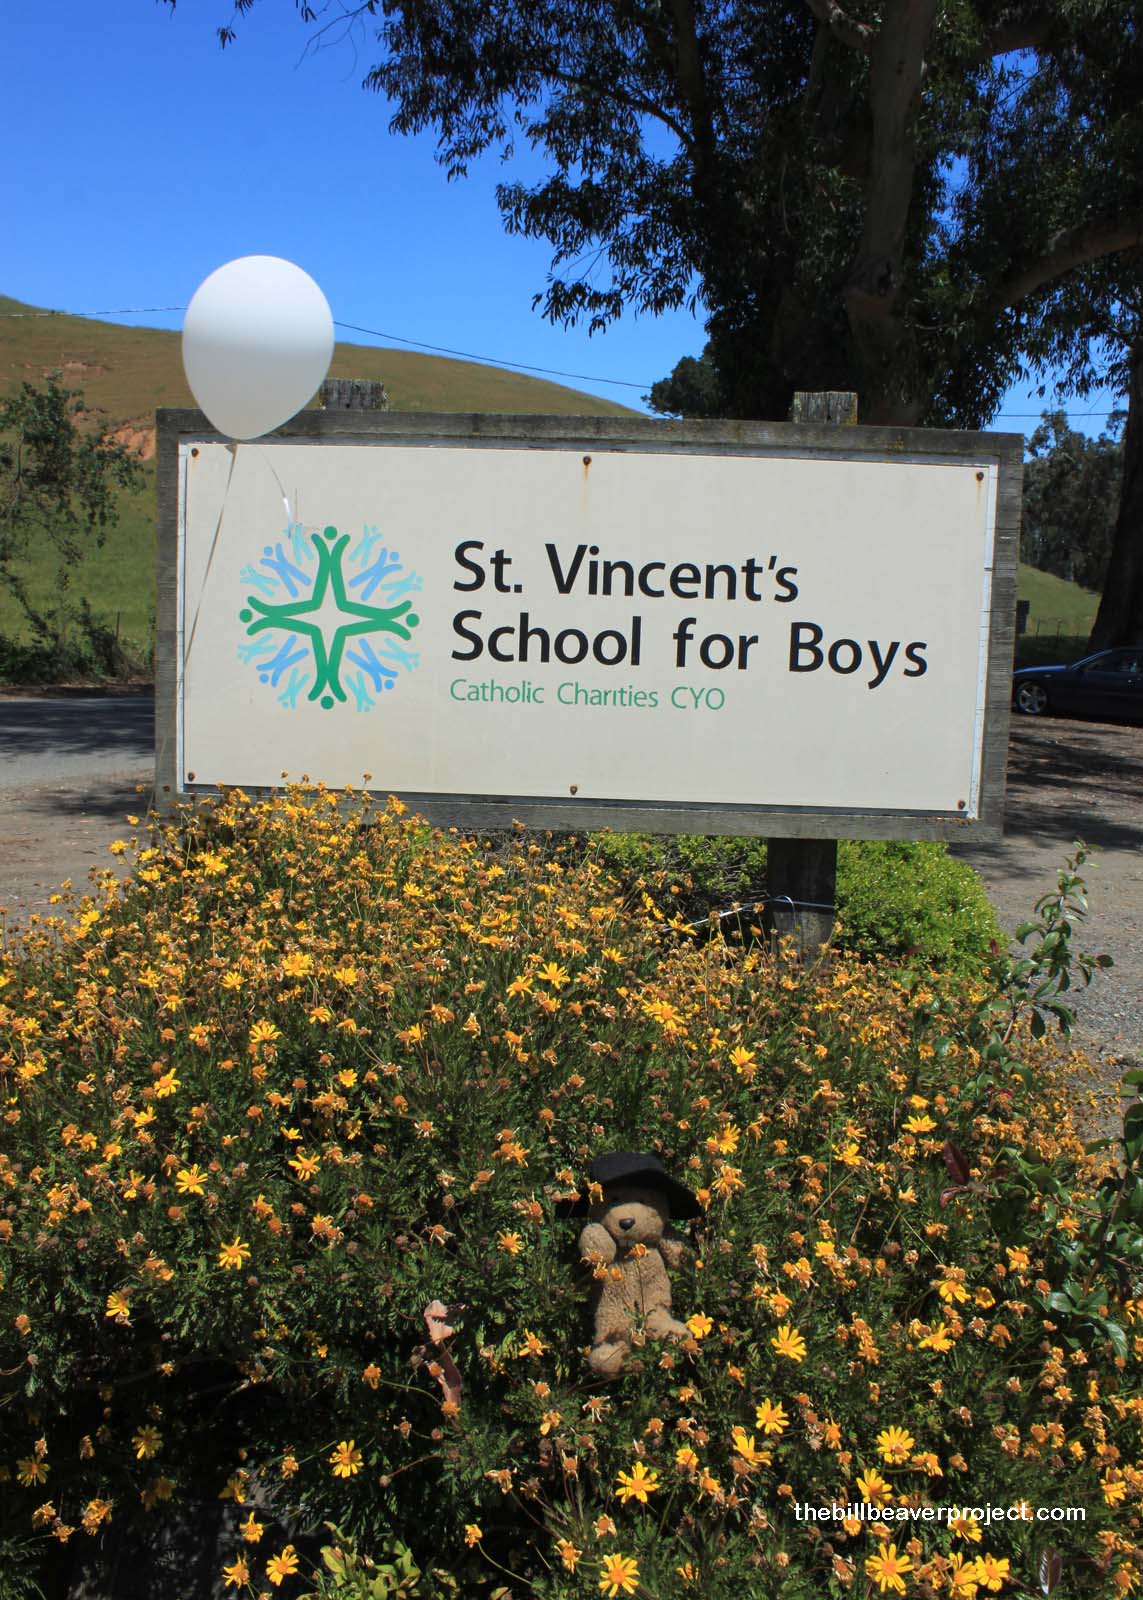 St. Vincent's School for Boys